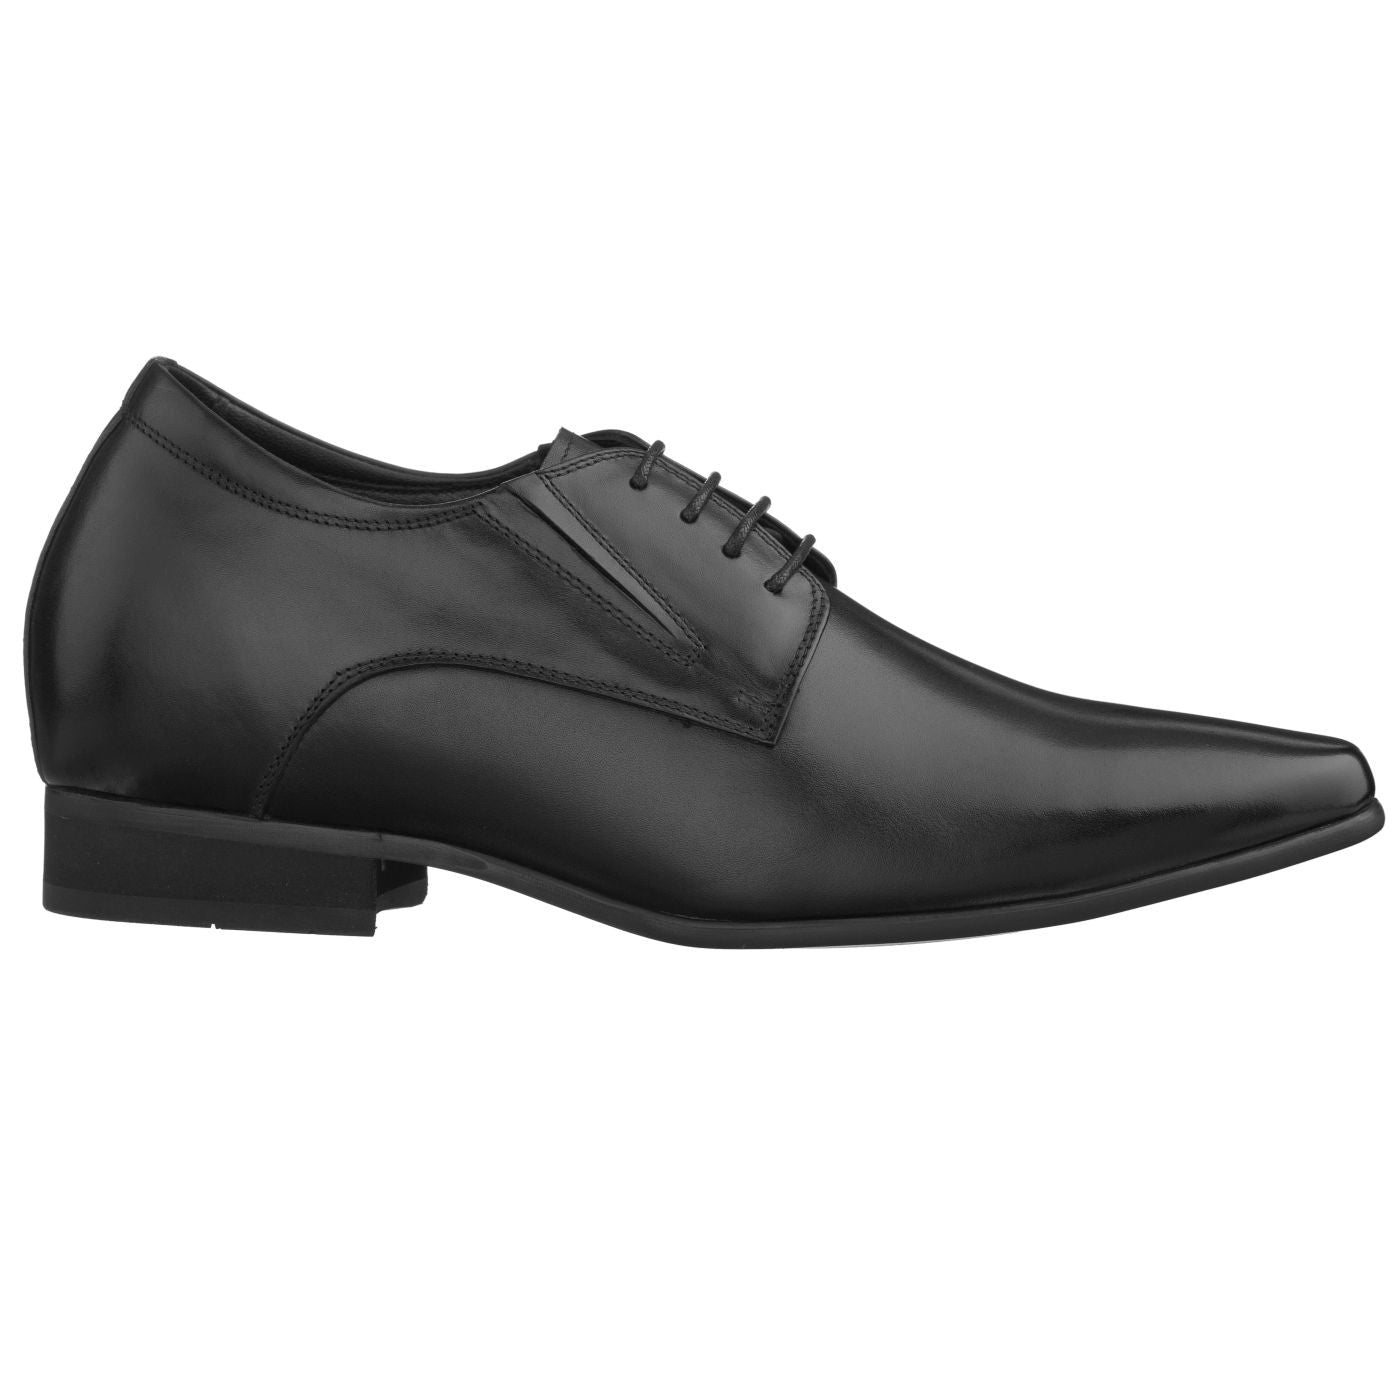 CALTO Black Dress Elevator Shoes Y5051 - TallMenShoes.com ...